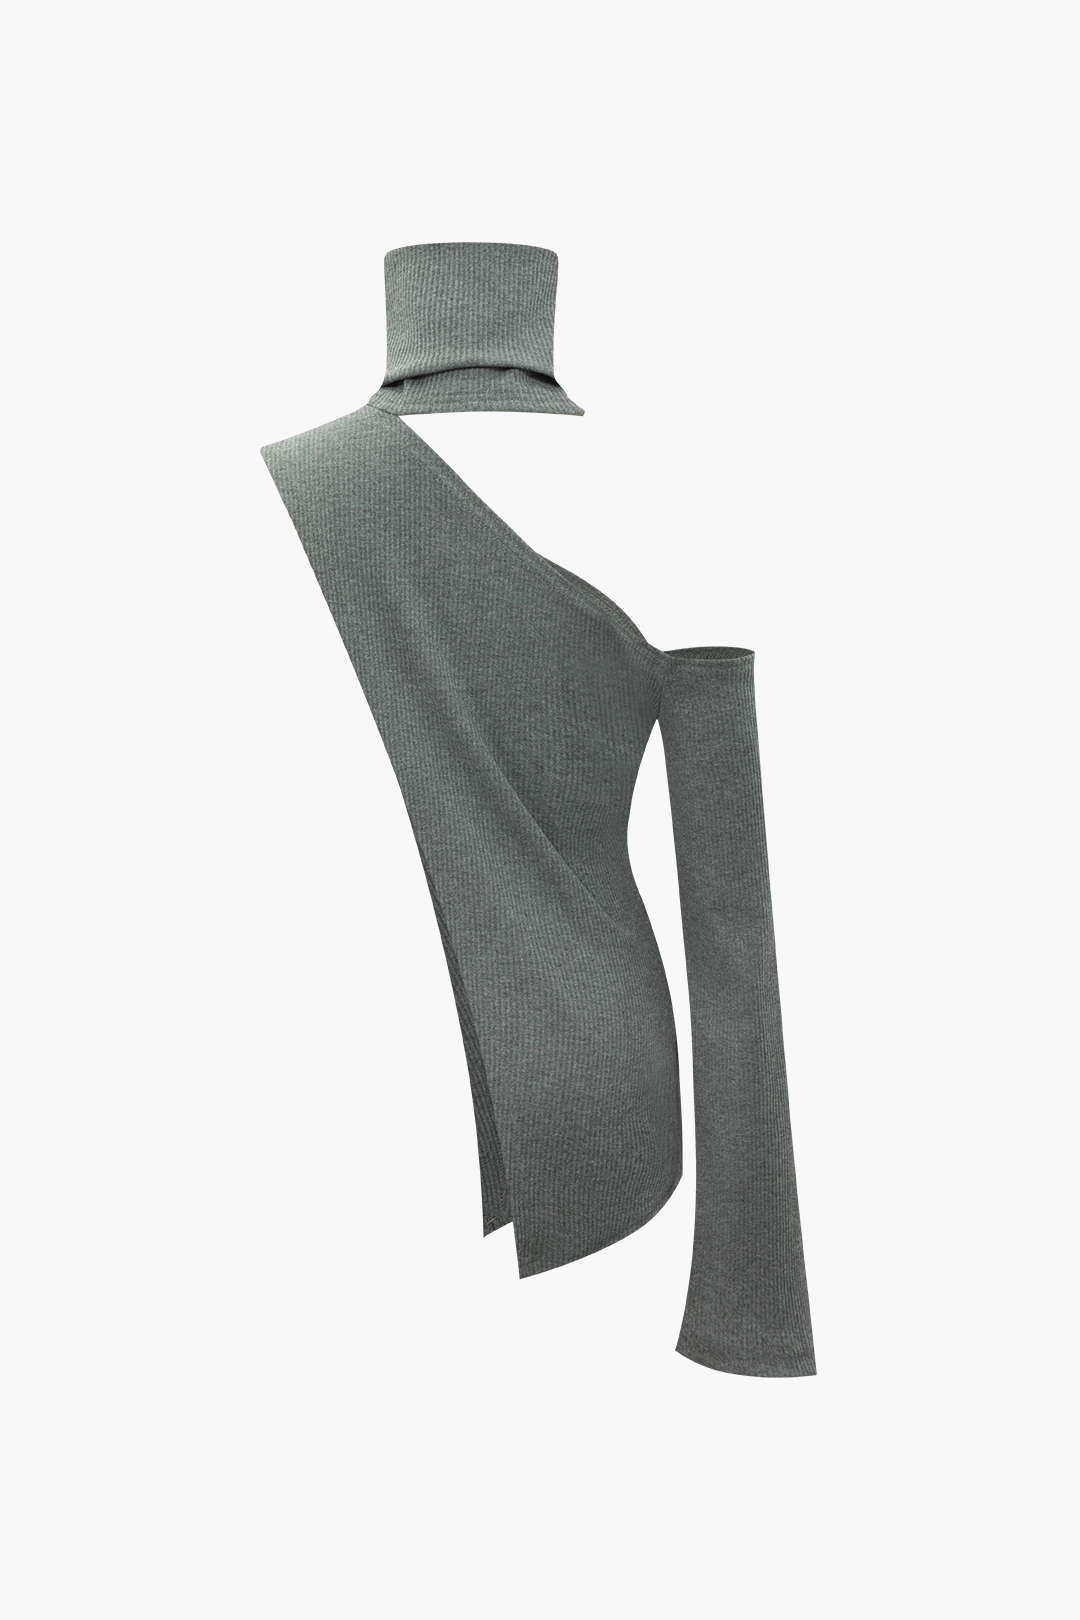 Asymmetric Knit Turtleneck Top And Midi Dress Set